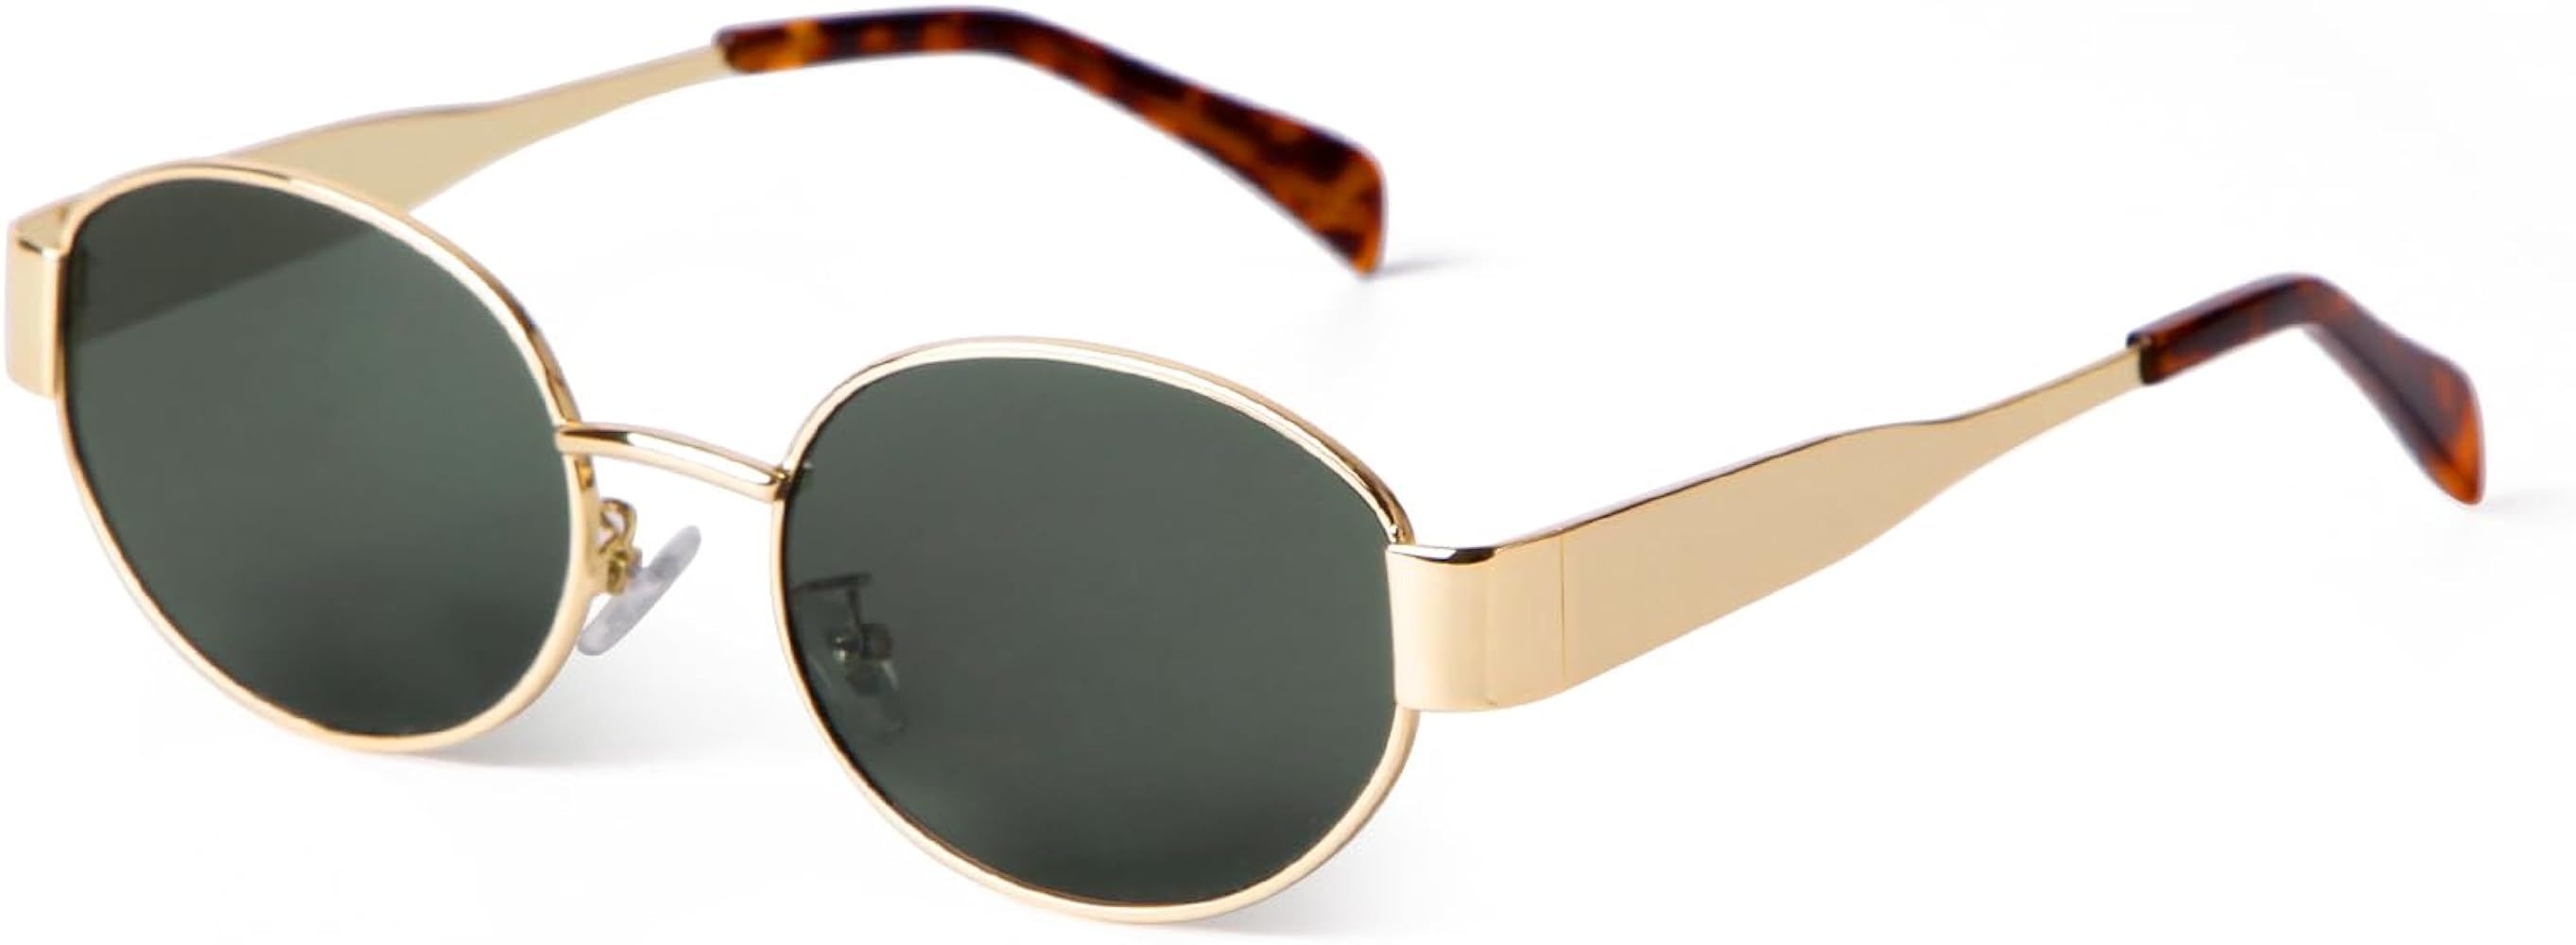 VIA LEECA Retro Oval Sunglasses for Women Men, 90s UV400 Protection Sun Glasses Classic Shades | Amazon (CA)